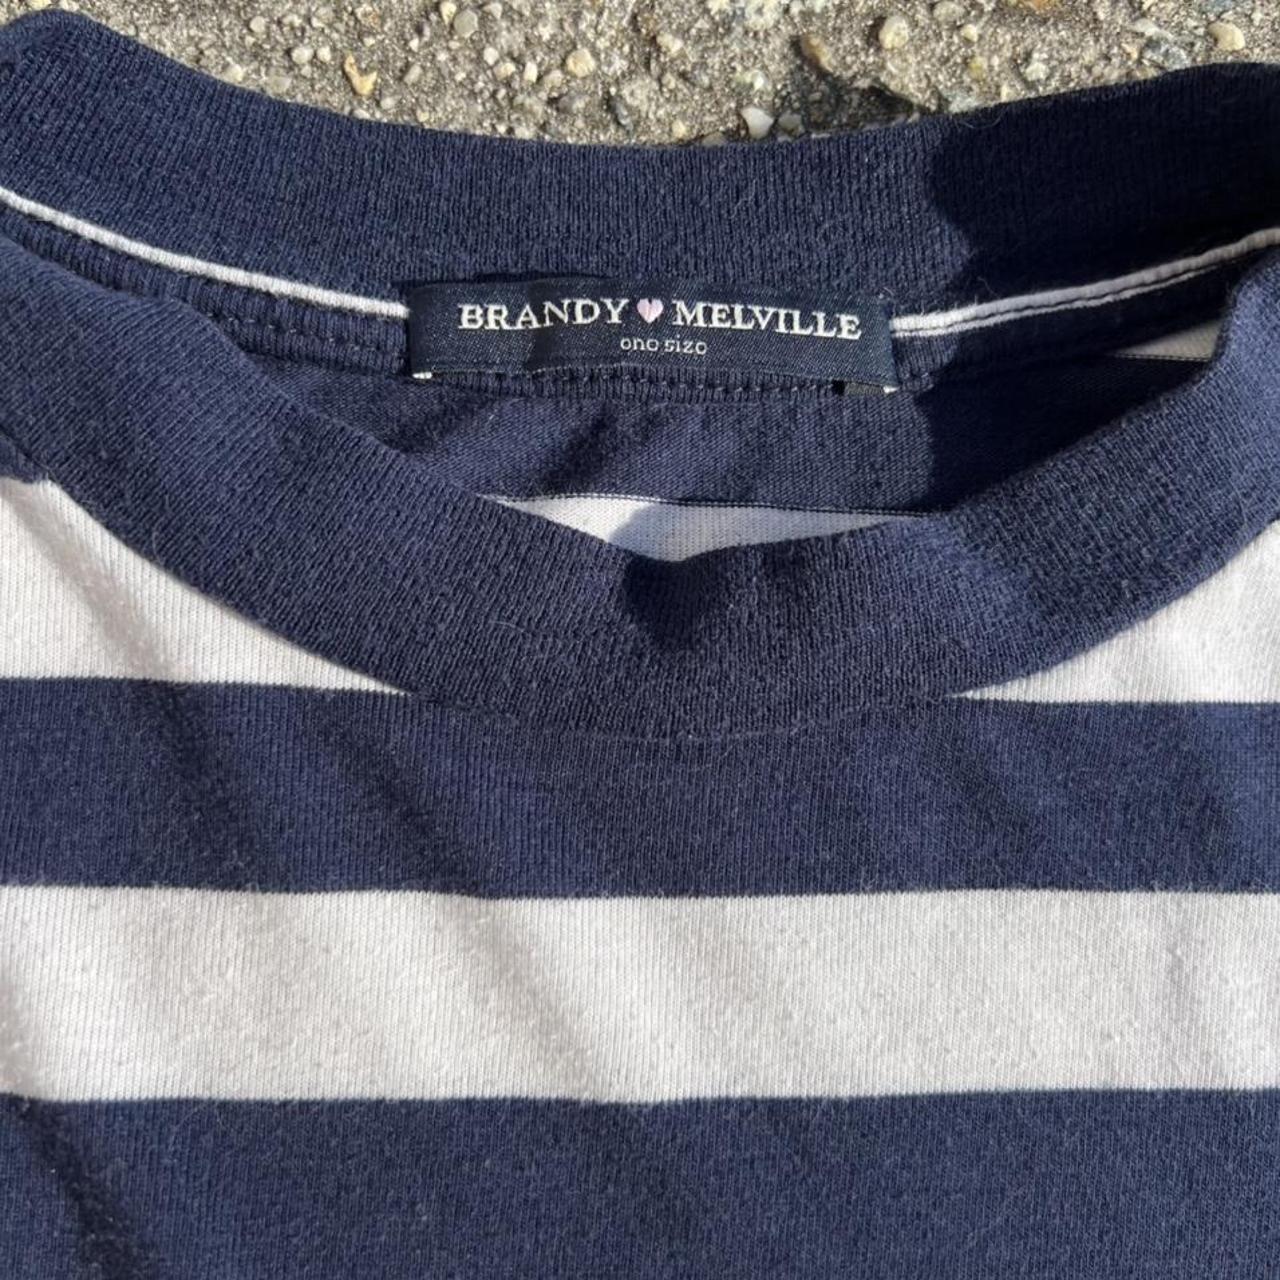 Brandy Melville long sleeve - Depop